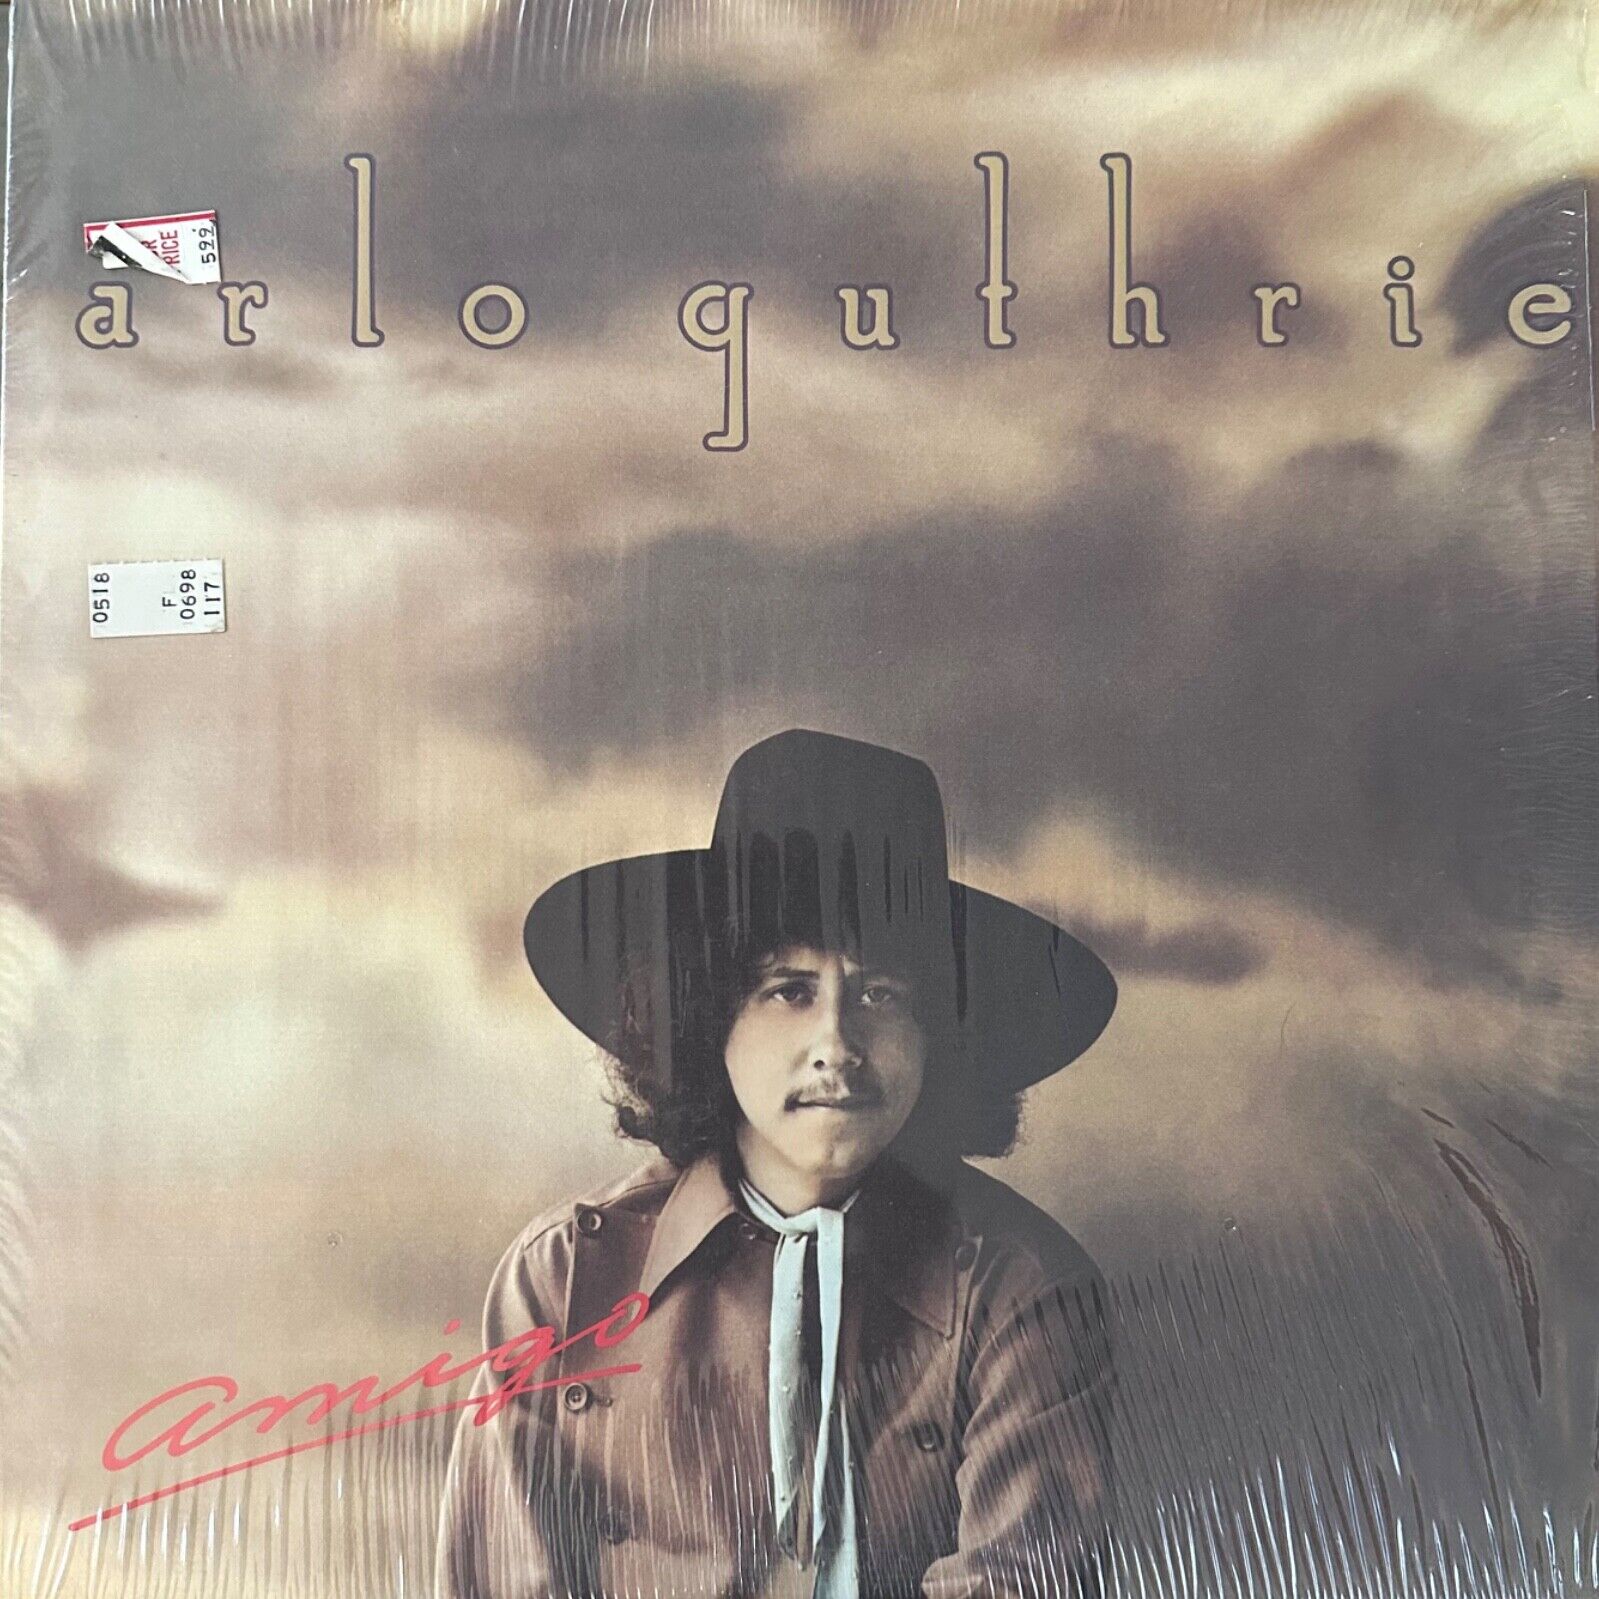 Arlo Guthrie: Amigo - Vinyl, LP, Reprise MS 2239, US 1976 Original Shrink